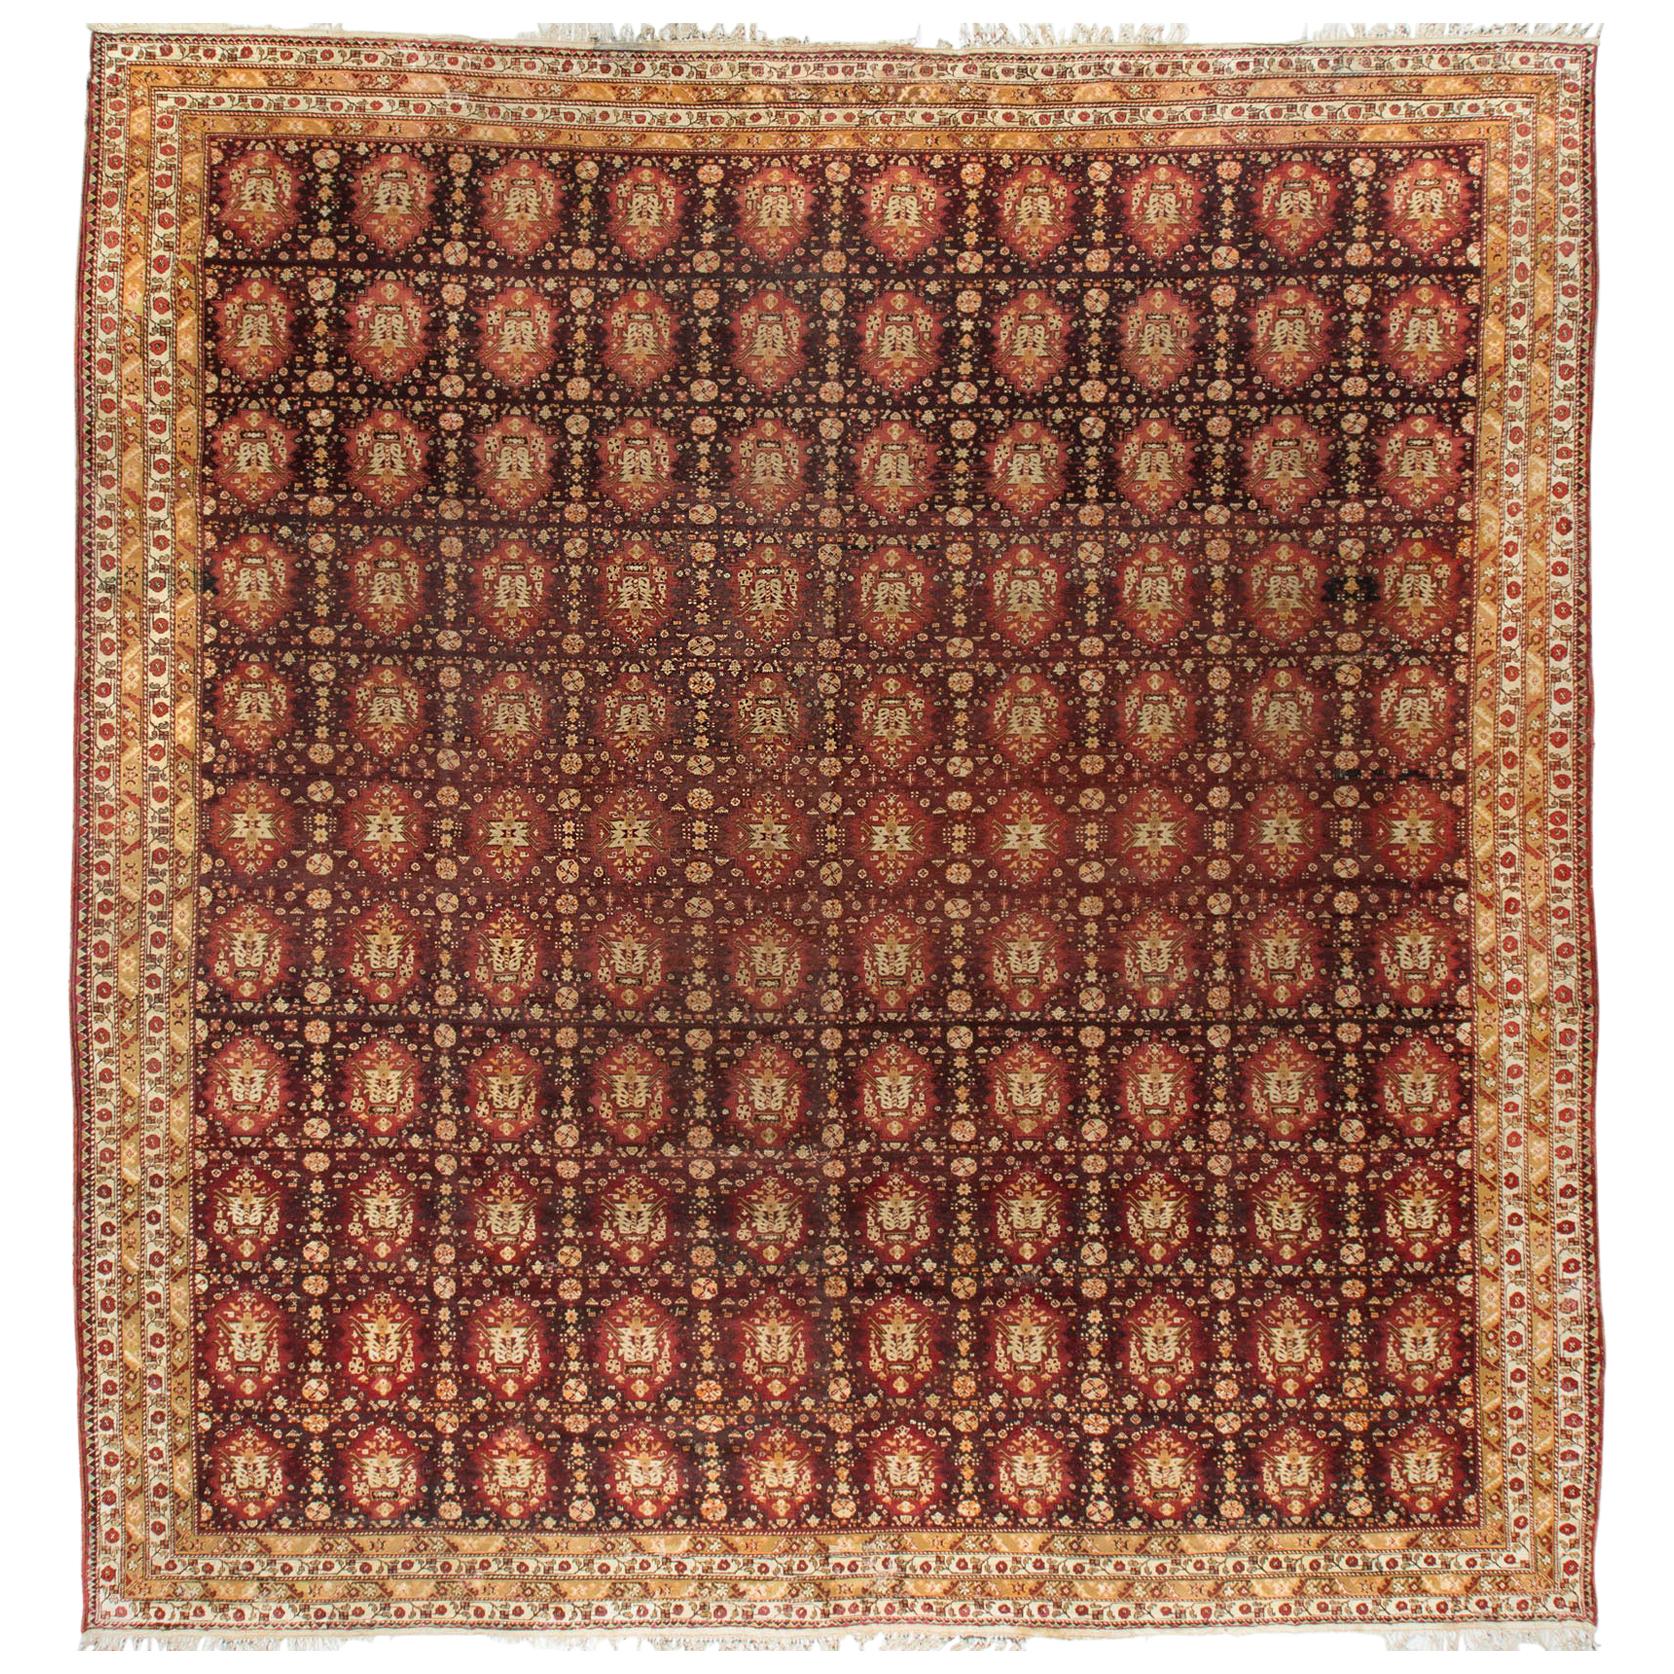 Antique Square Agra Rug, circa 1880  18' x 18'8 For Sale